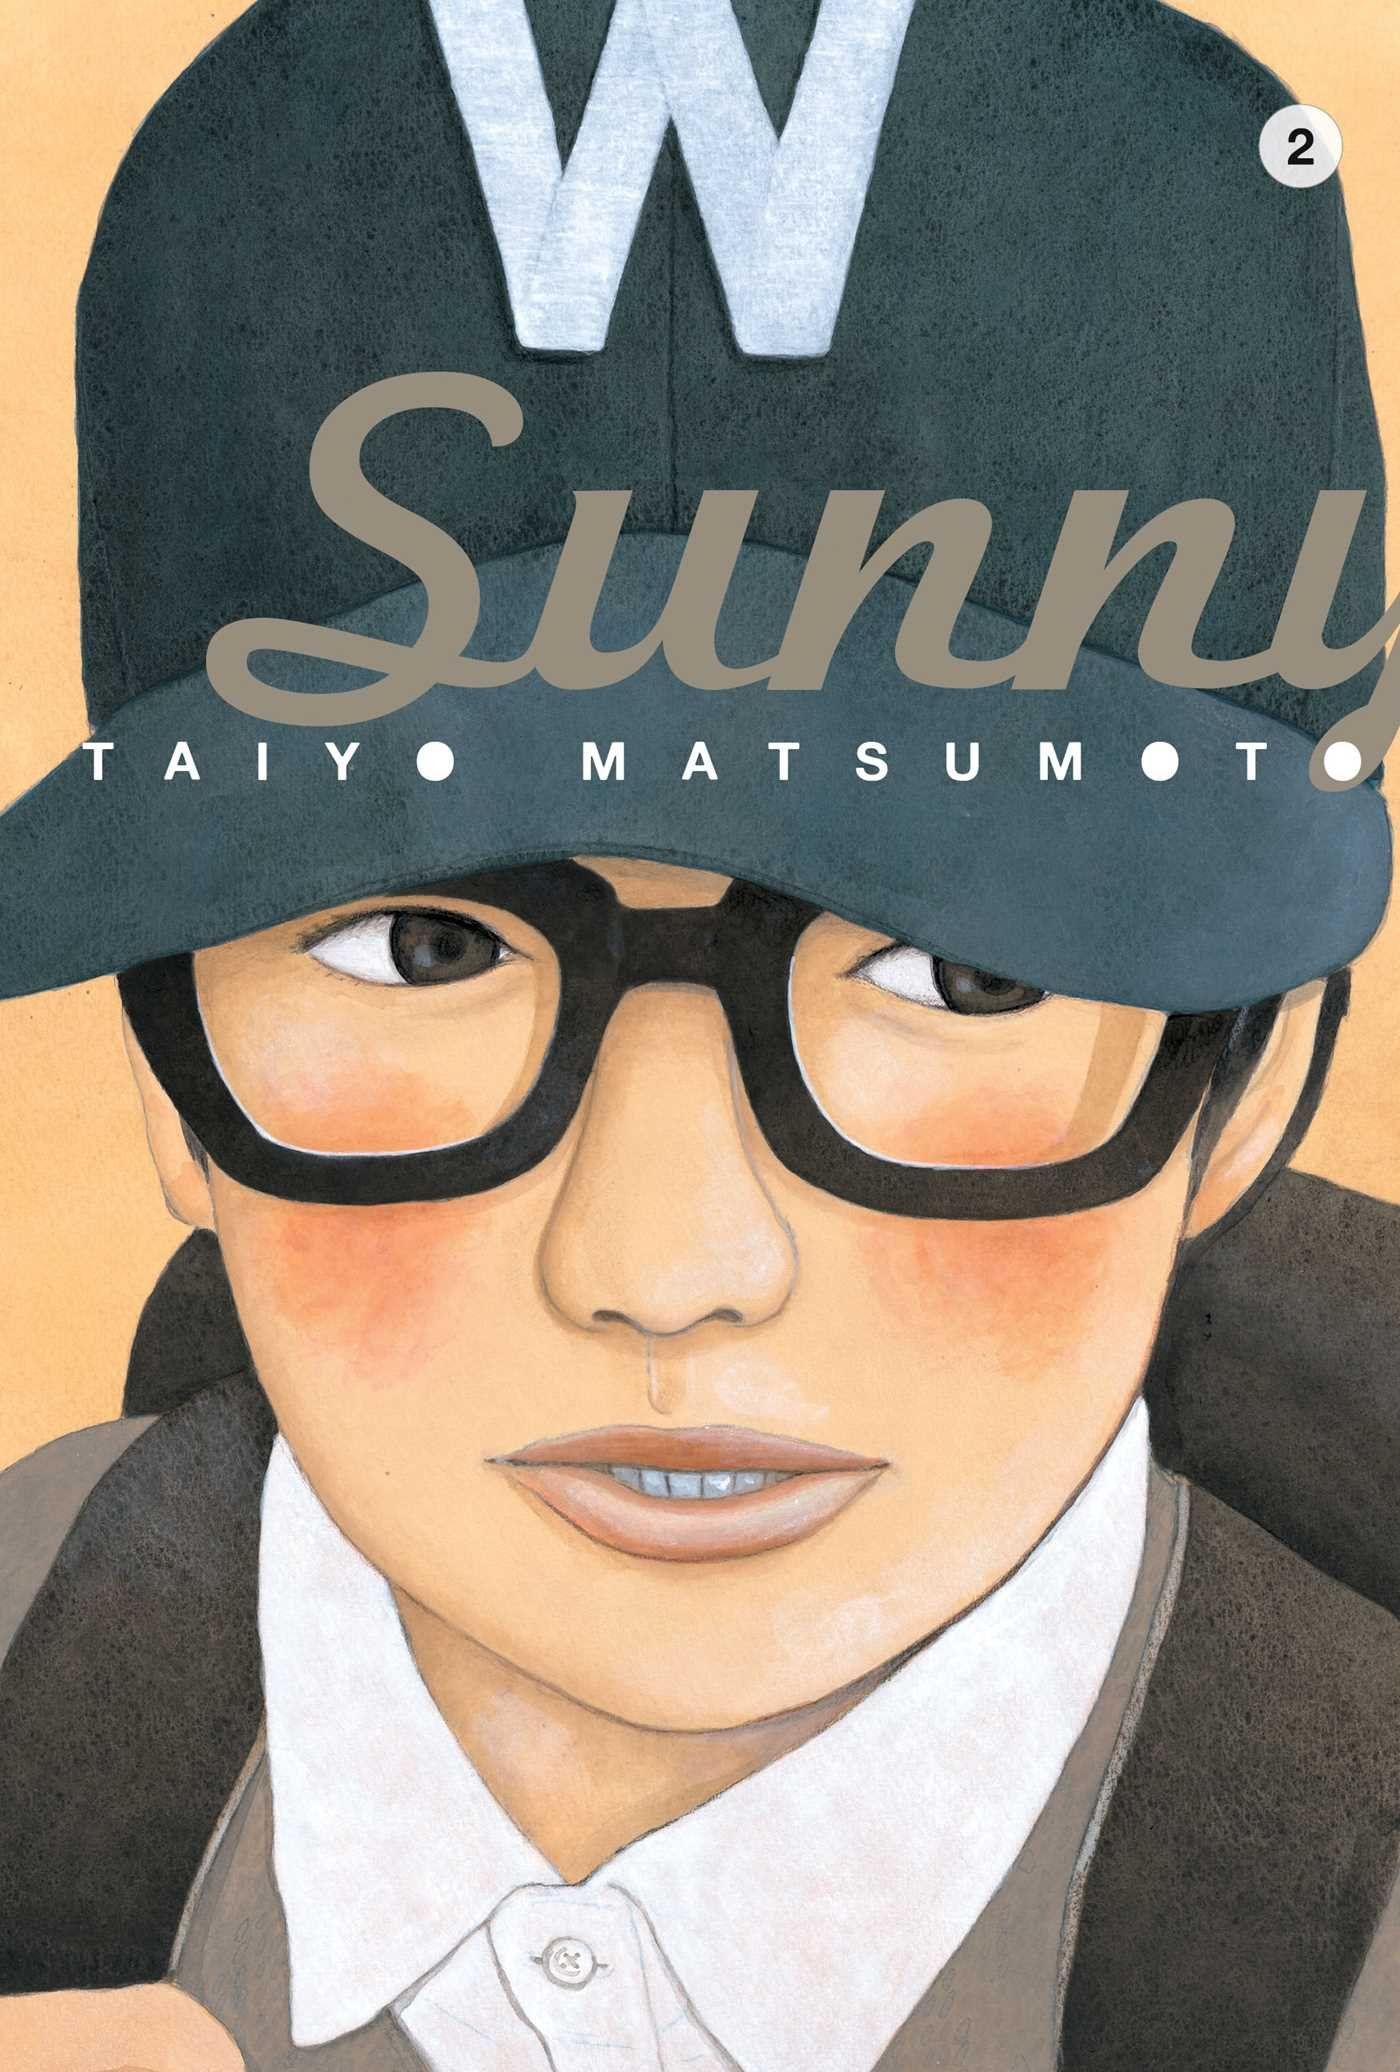 From the Archives: Taiyo Matsumoto's Sunny V2